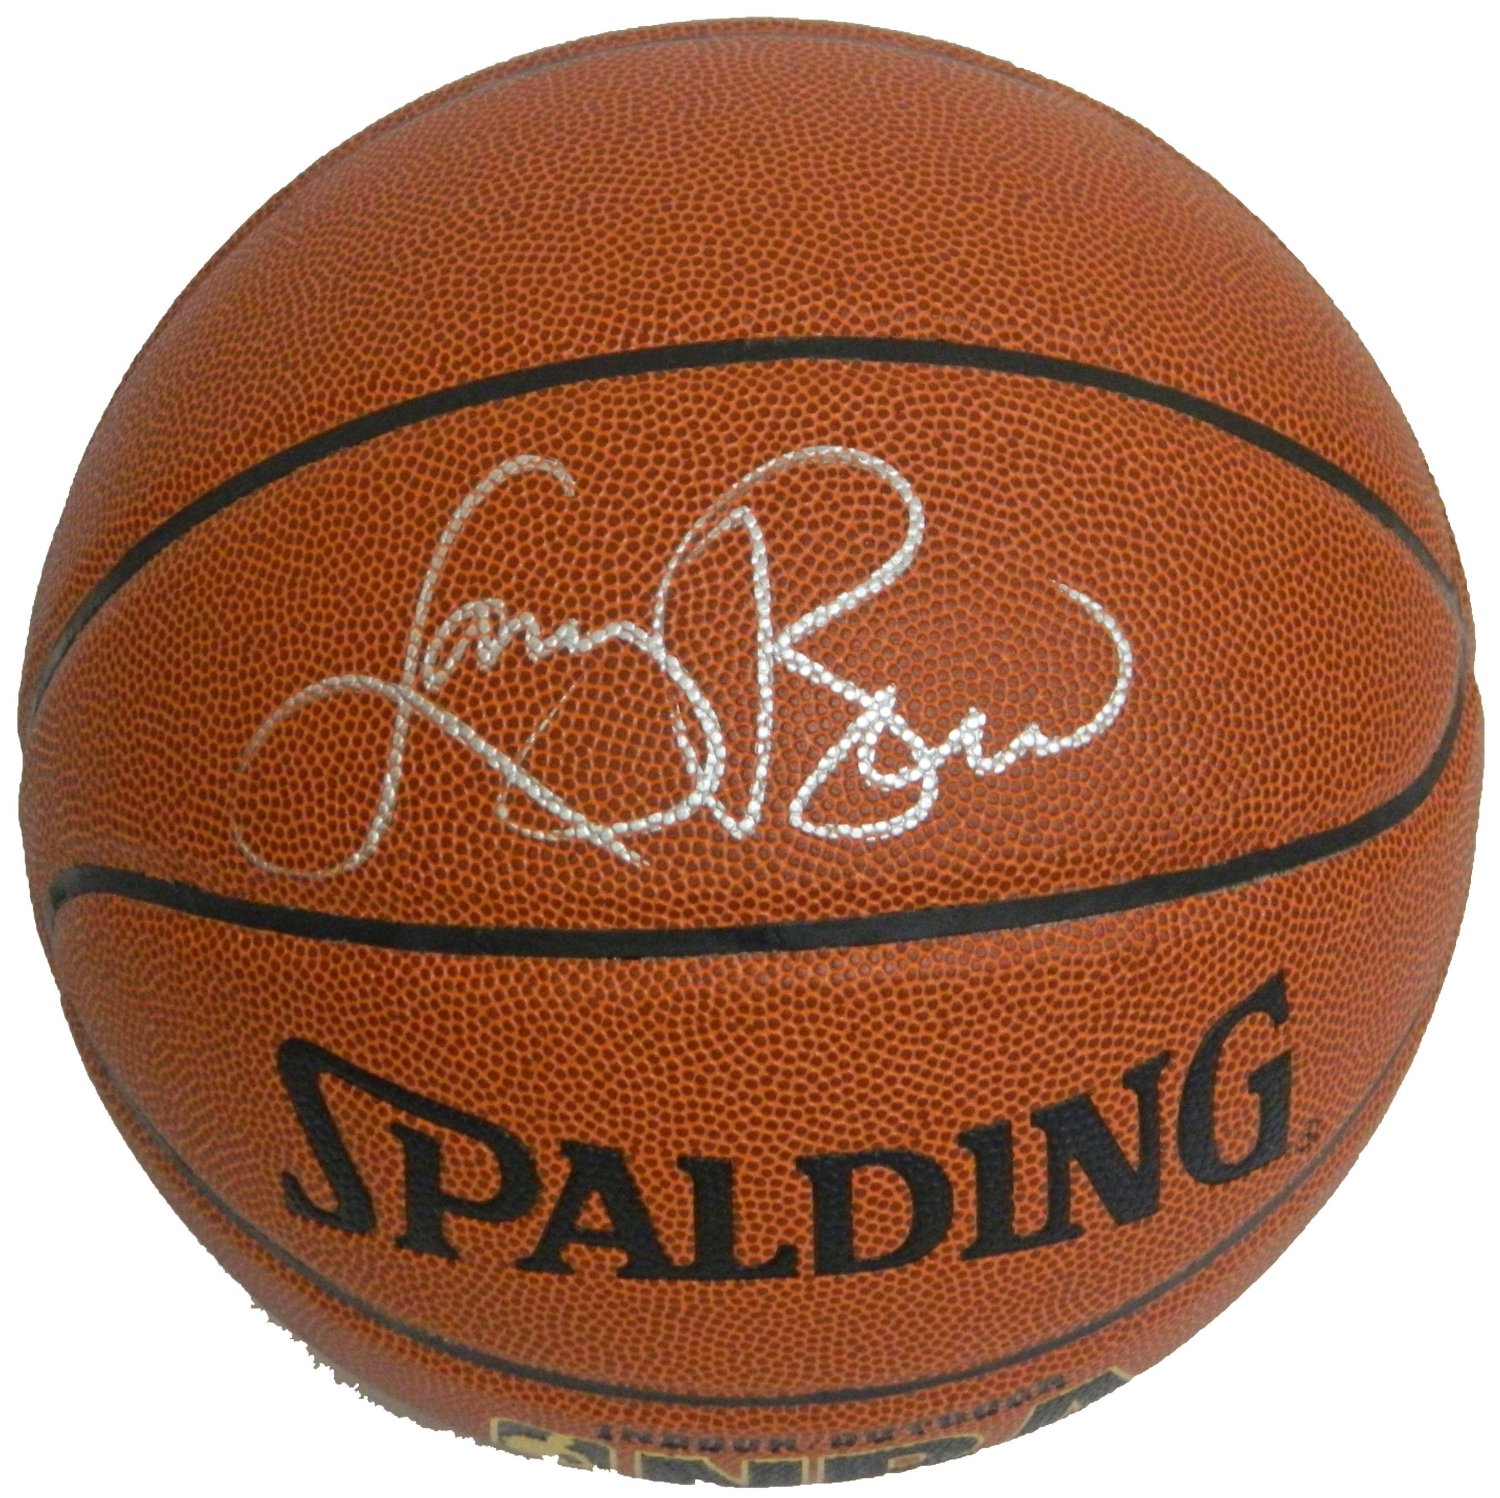 Larry Bird Autographed Spalding Ball